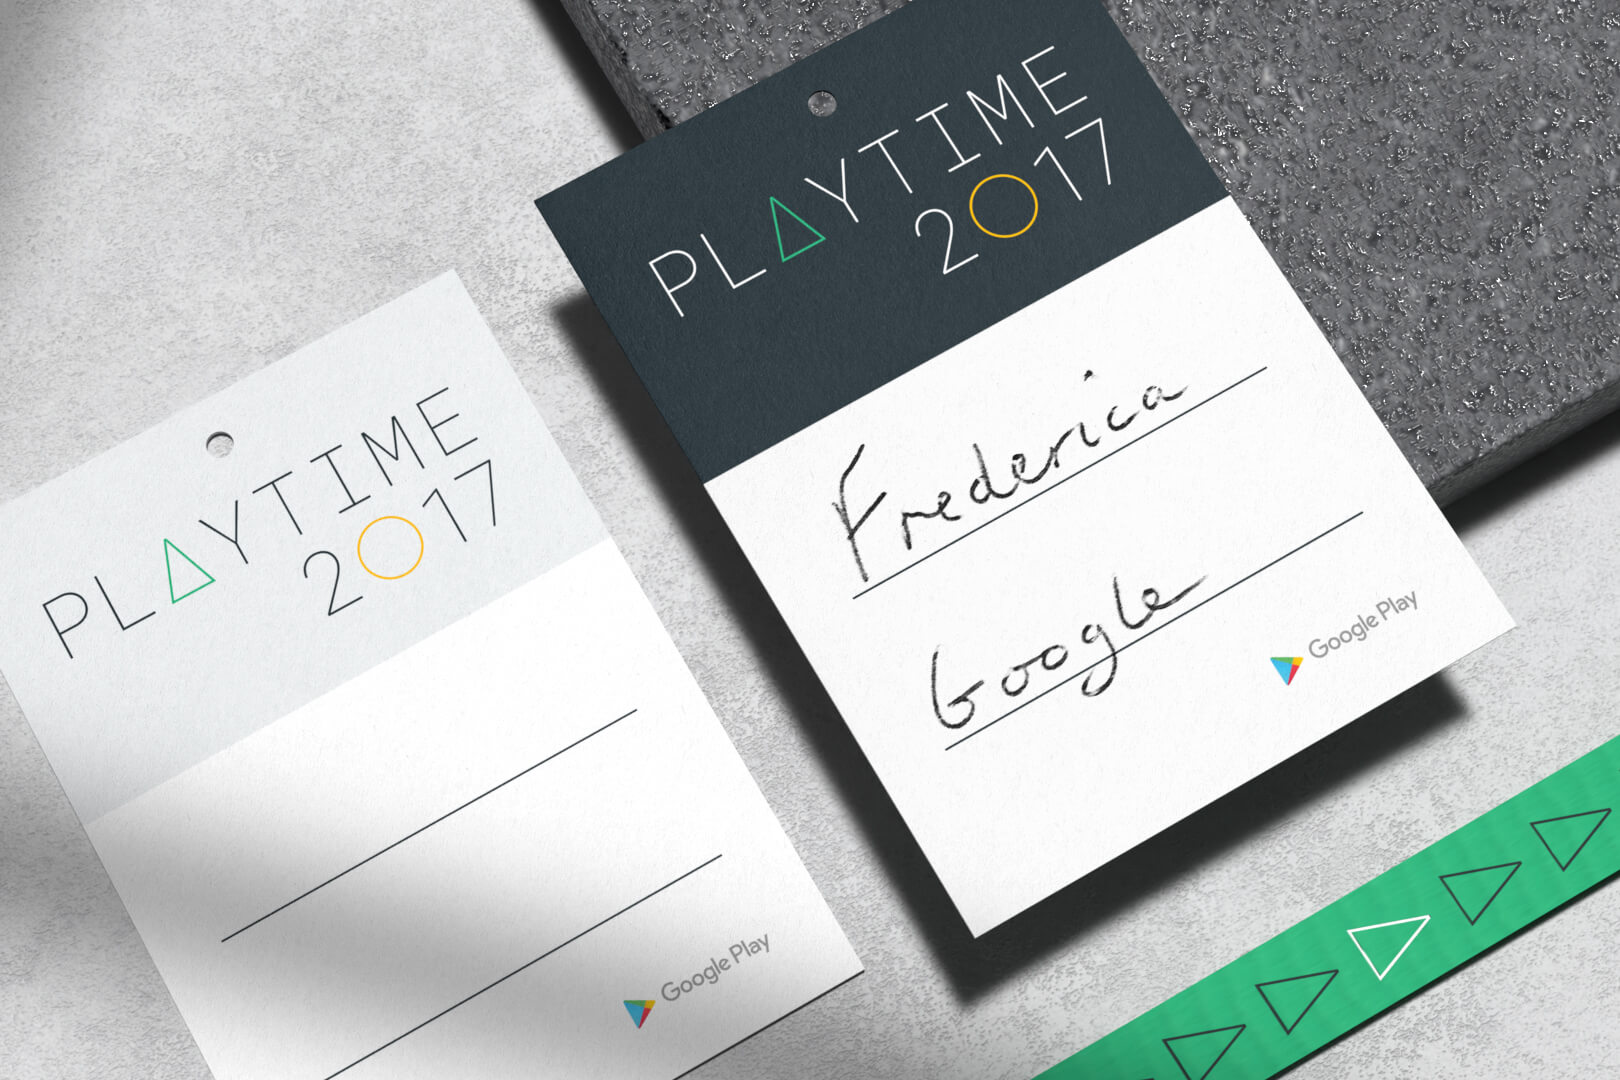 Playtime 2017